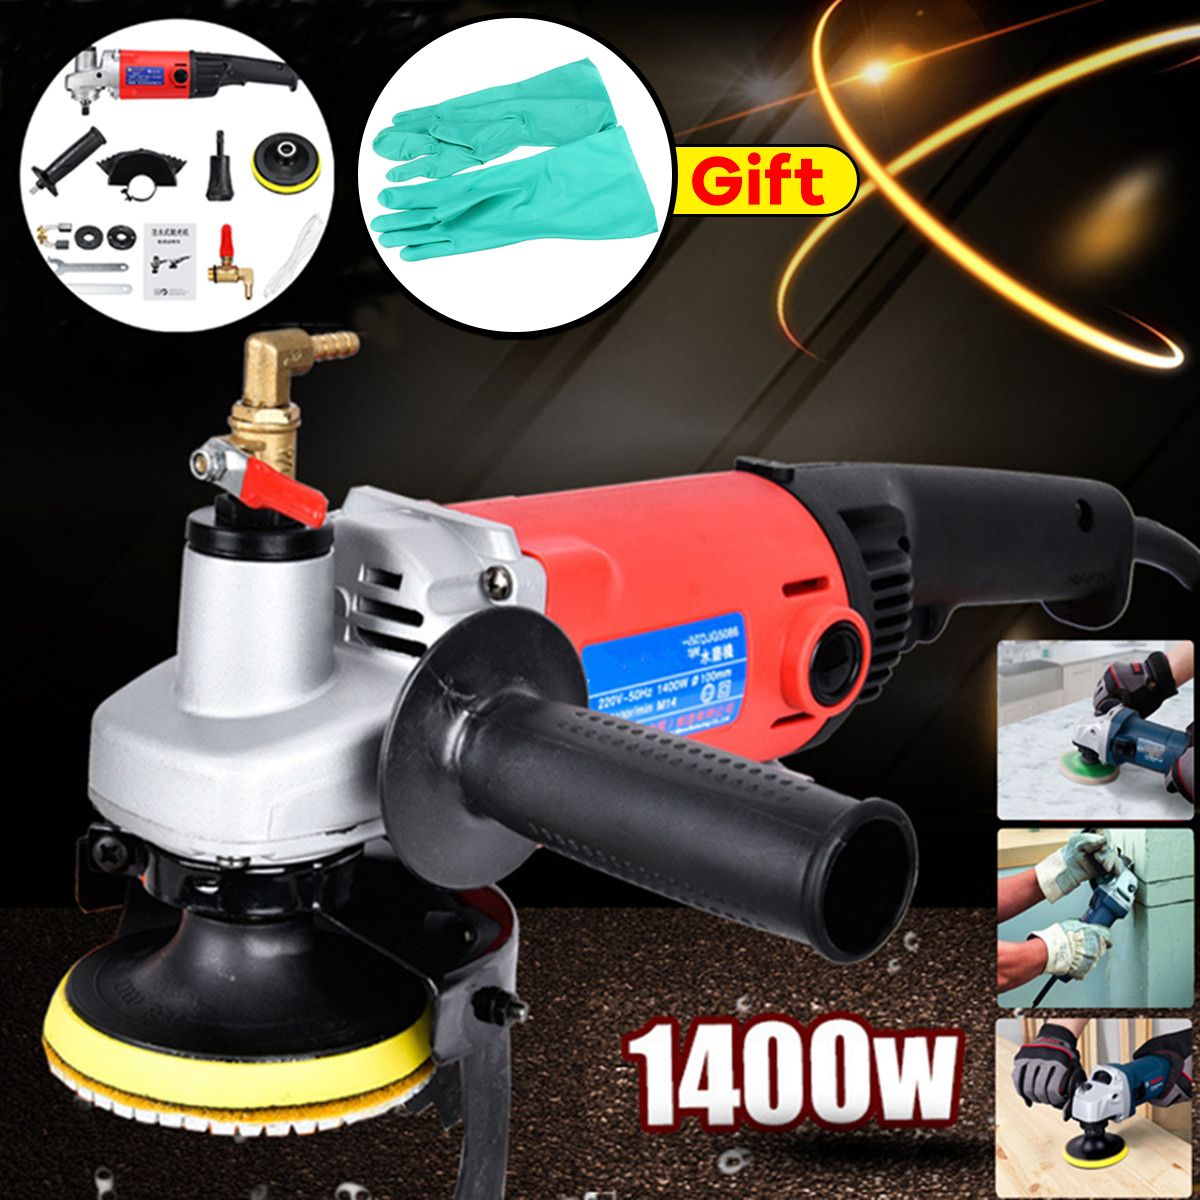 1400W-Wet-Polisher-Grinder-Speed-Adjustable-Diamond-Polishing-Pads-Kit-Grinding-Machine-Tool-Concret-1393985